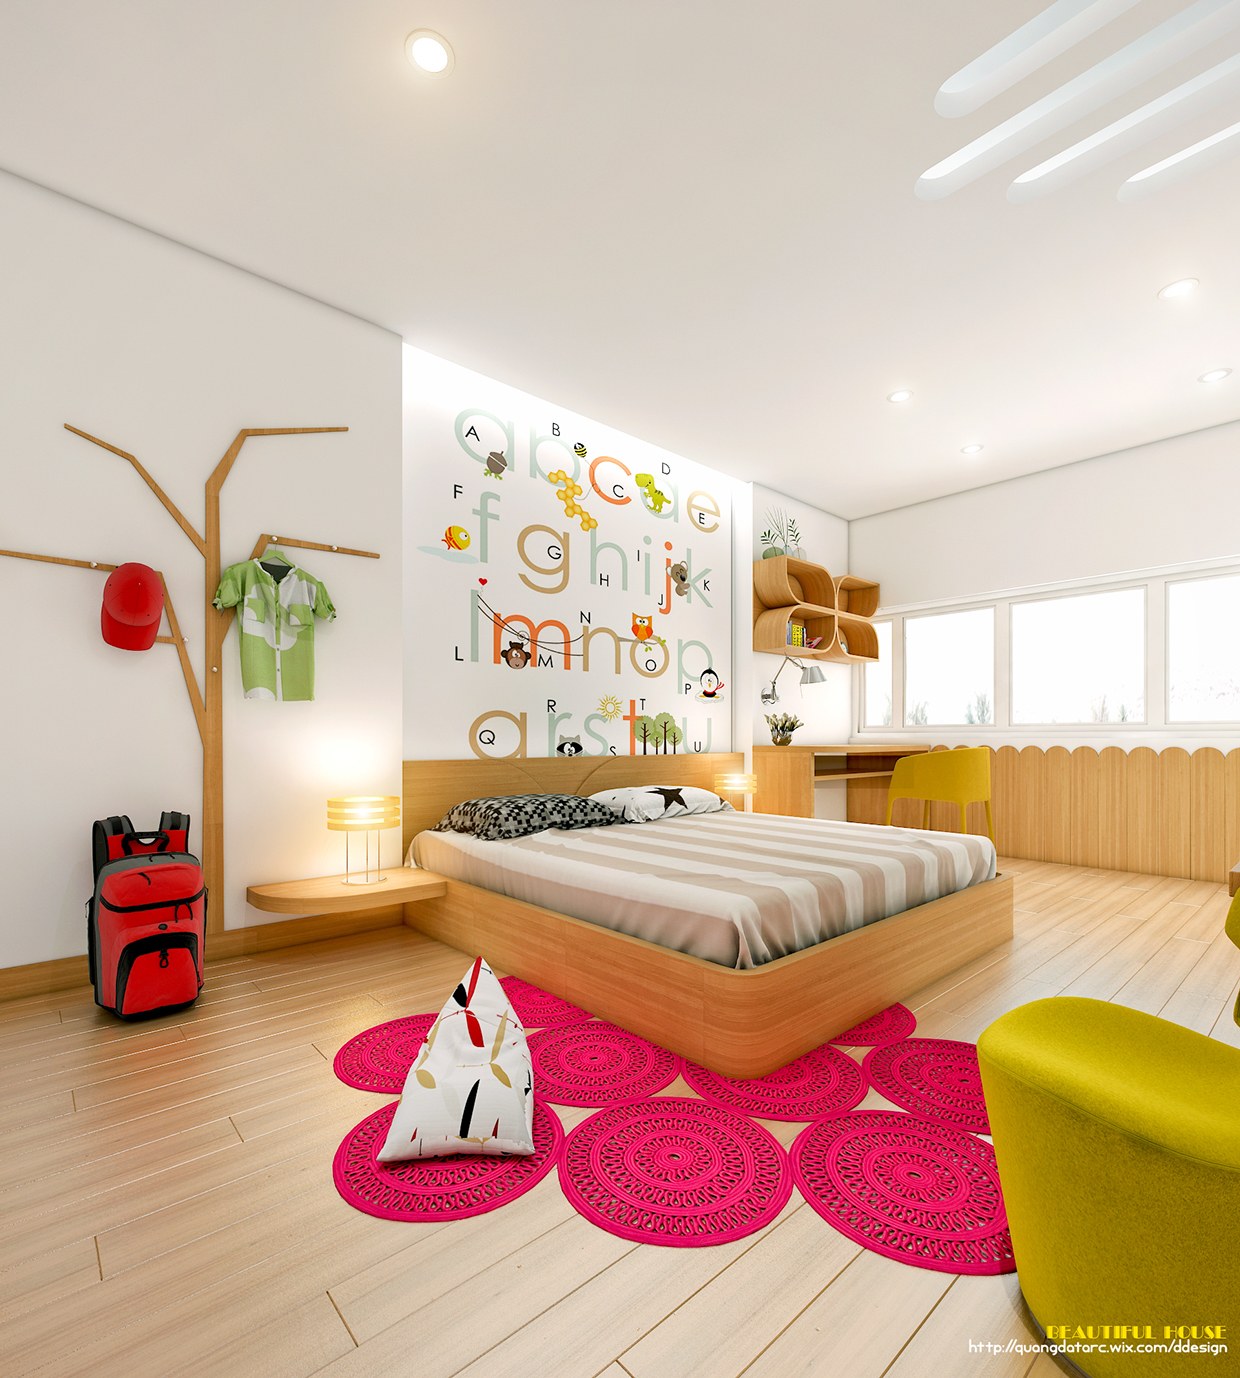 happy teen room design "width =" 1240 "height =" 1378 "srcset =" https://mileray.com/wp-content/uploads/2020/05/1588509311_235_3-Modern-Teen-Room-Designs-Decorated-With-Creative-Ideas-Looks.jpg 1240w, https://mileray.com / wp-content / uploads / 2016/10 / DT-Architects2-270x300.jpg 270w, https://mileray.com/wp-content/uploads/2016/10/DT-Architects2-768x853.jpg 768w, https: / / mileray.com/wp-content/uploads/2016/10/DT-Architects2-921x1024.jpg 921w, https://mileray.com/wp-content/uploads/2016/10/DT-Architects2-696x773.jpg 696w, https://mileray.com/wp-content/uploads/2016/10/DT-Architects2-1068x1187.jpg 1068w, https://mileray.com/wp-content/uploads/2016/10/DT-Architects2- 378x420 .jpg 378w "sizes =" (maximum width: 1240px) 100vw, 1240px